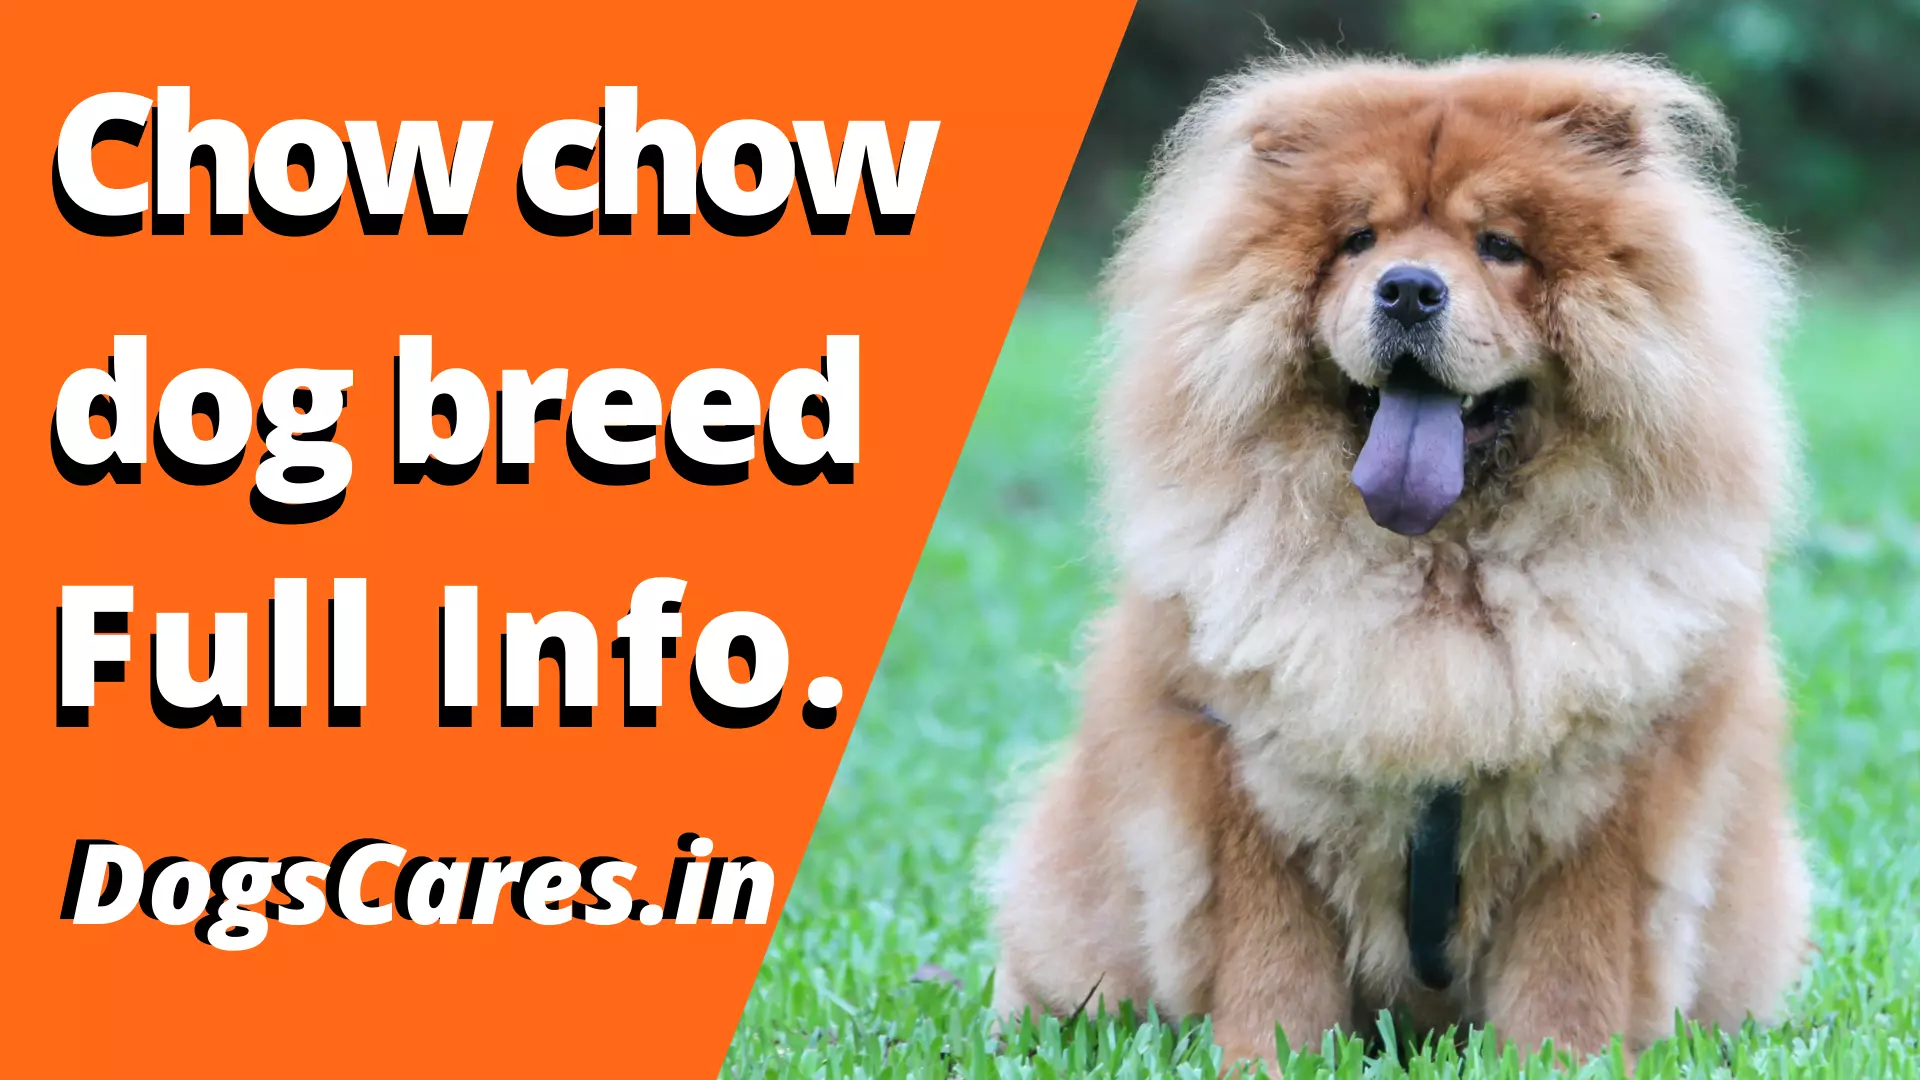 Chow chow dog breed